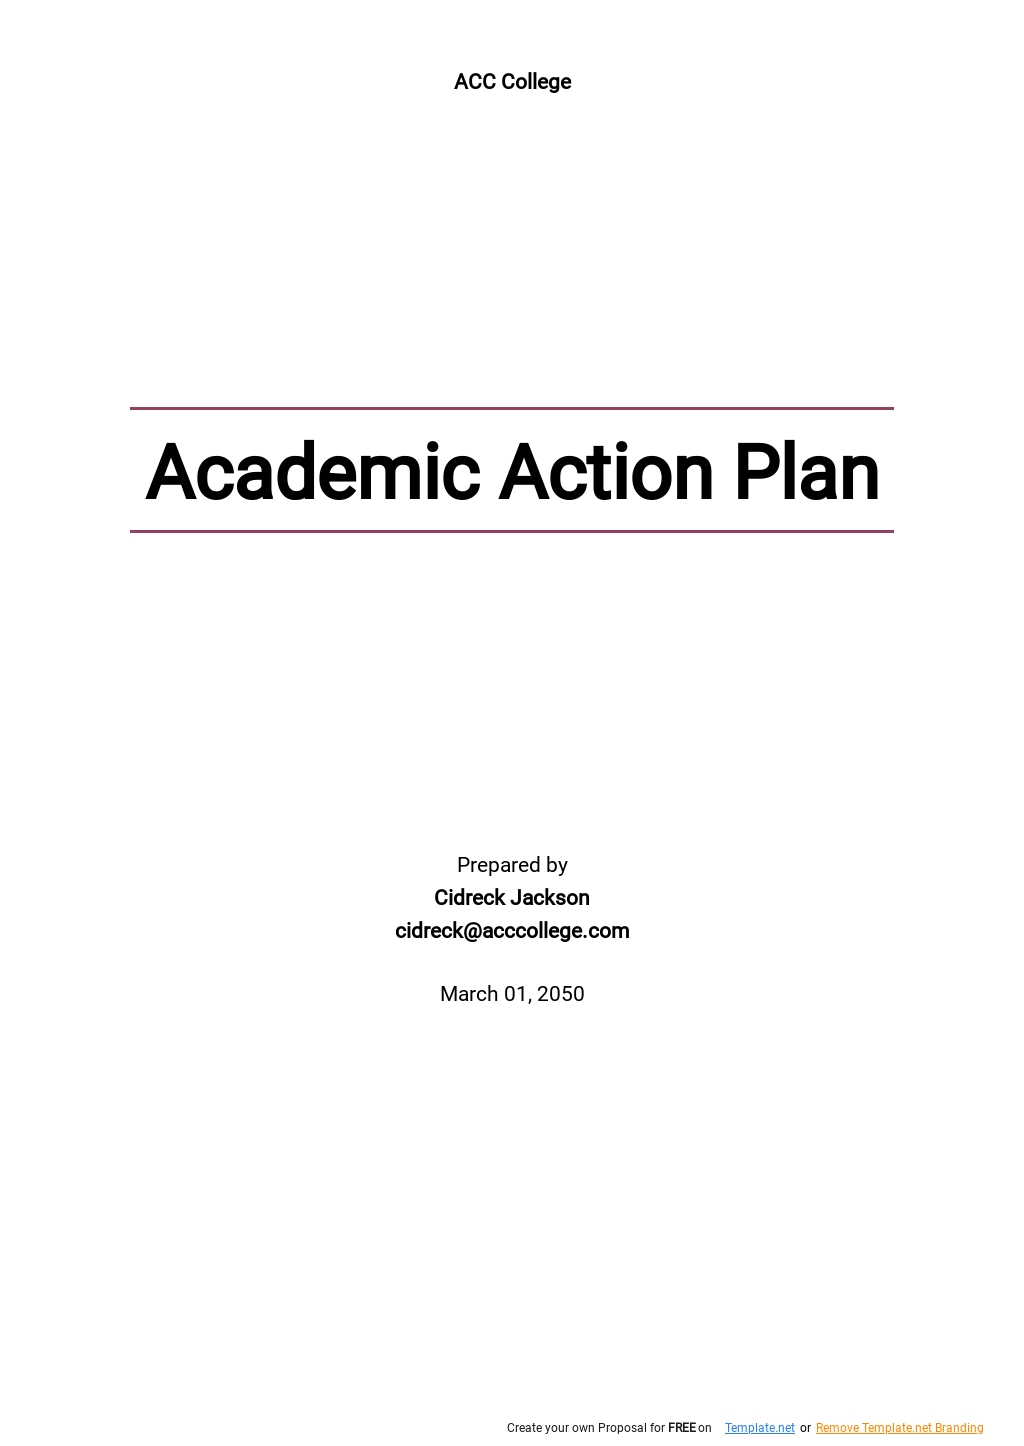 Academic Action Plan Template.jpe